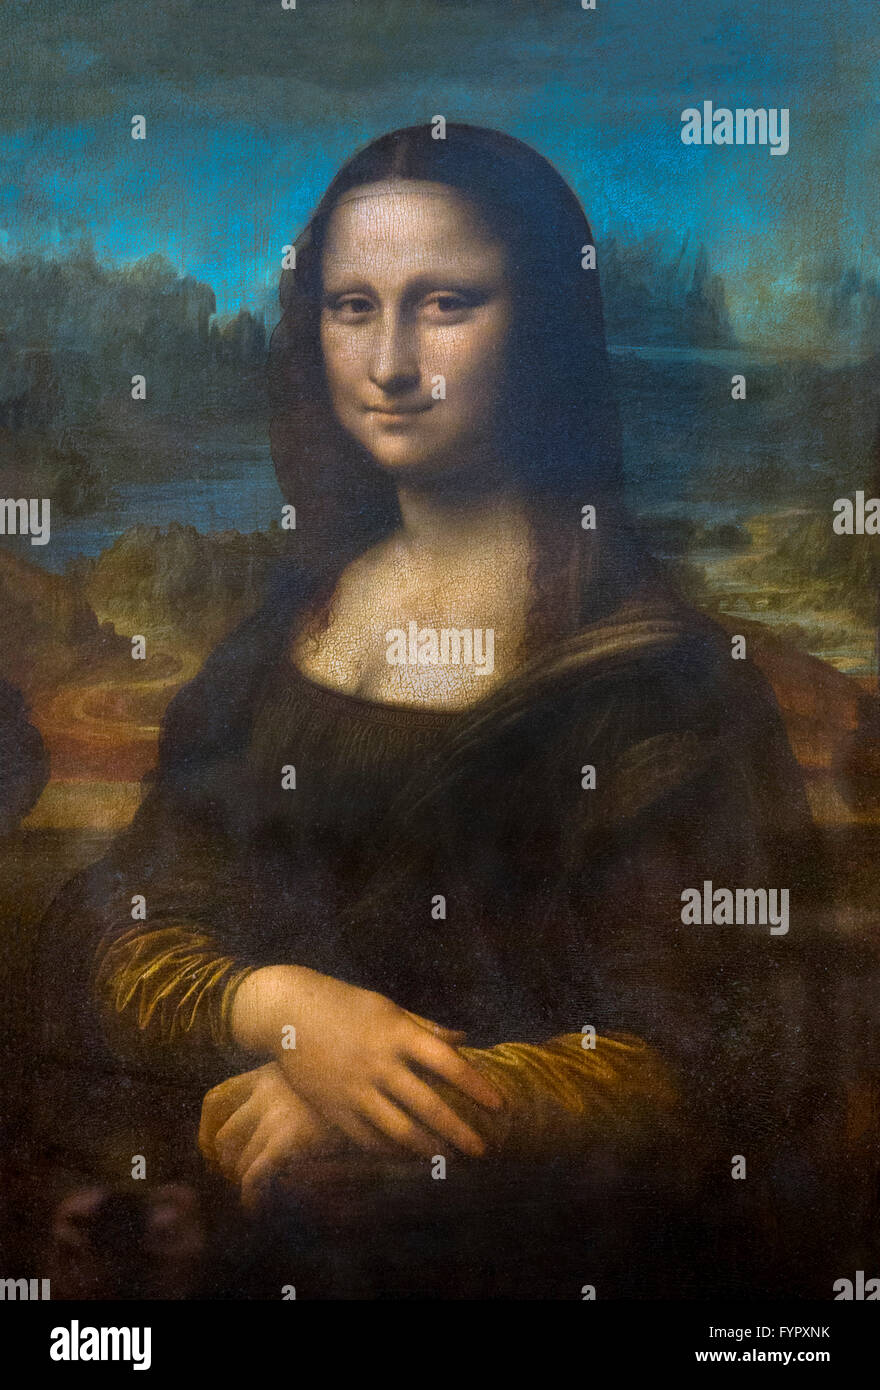 Mona Lisa, Retrato de Lisa Gherardini, esposa de Francesco del Giocondo, por Leonardo da Vinci, 1507, Musée du Louvre, París Francia Foto de stock